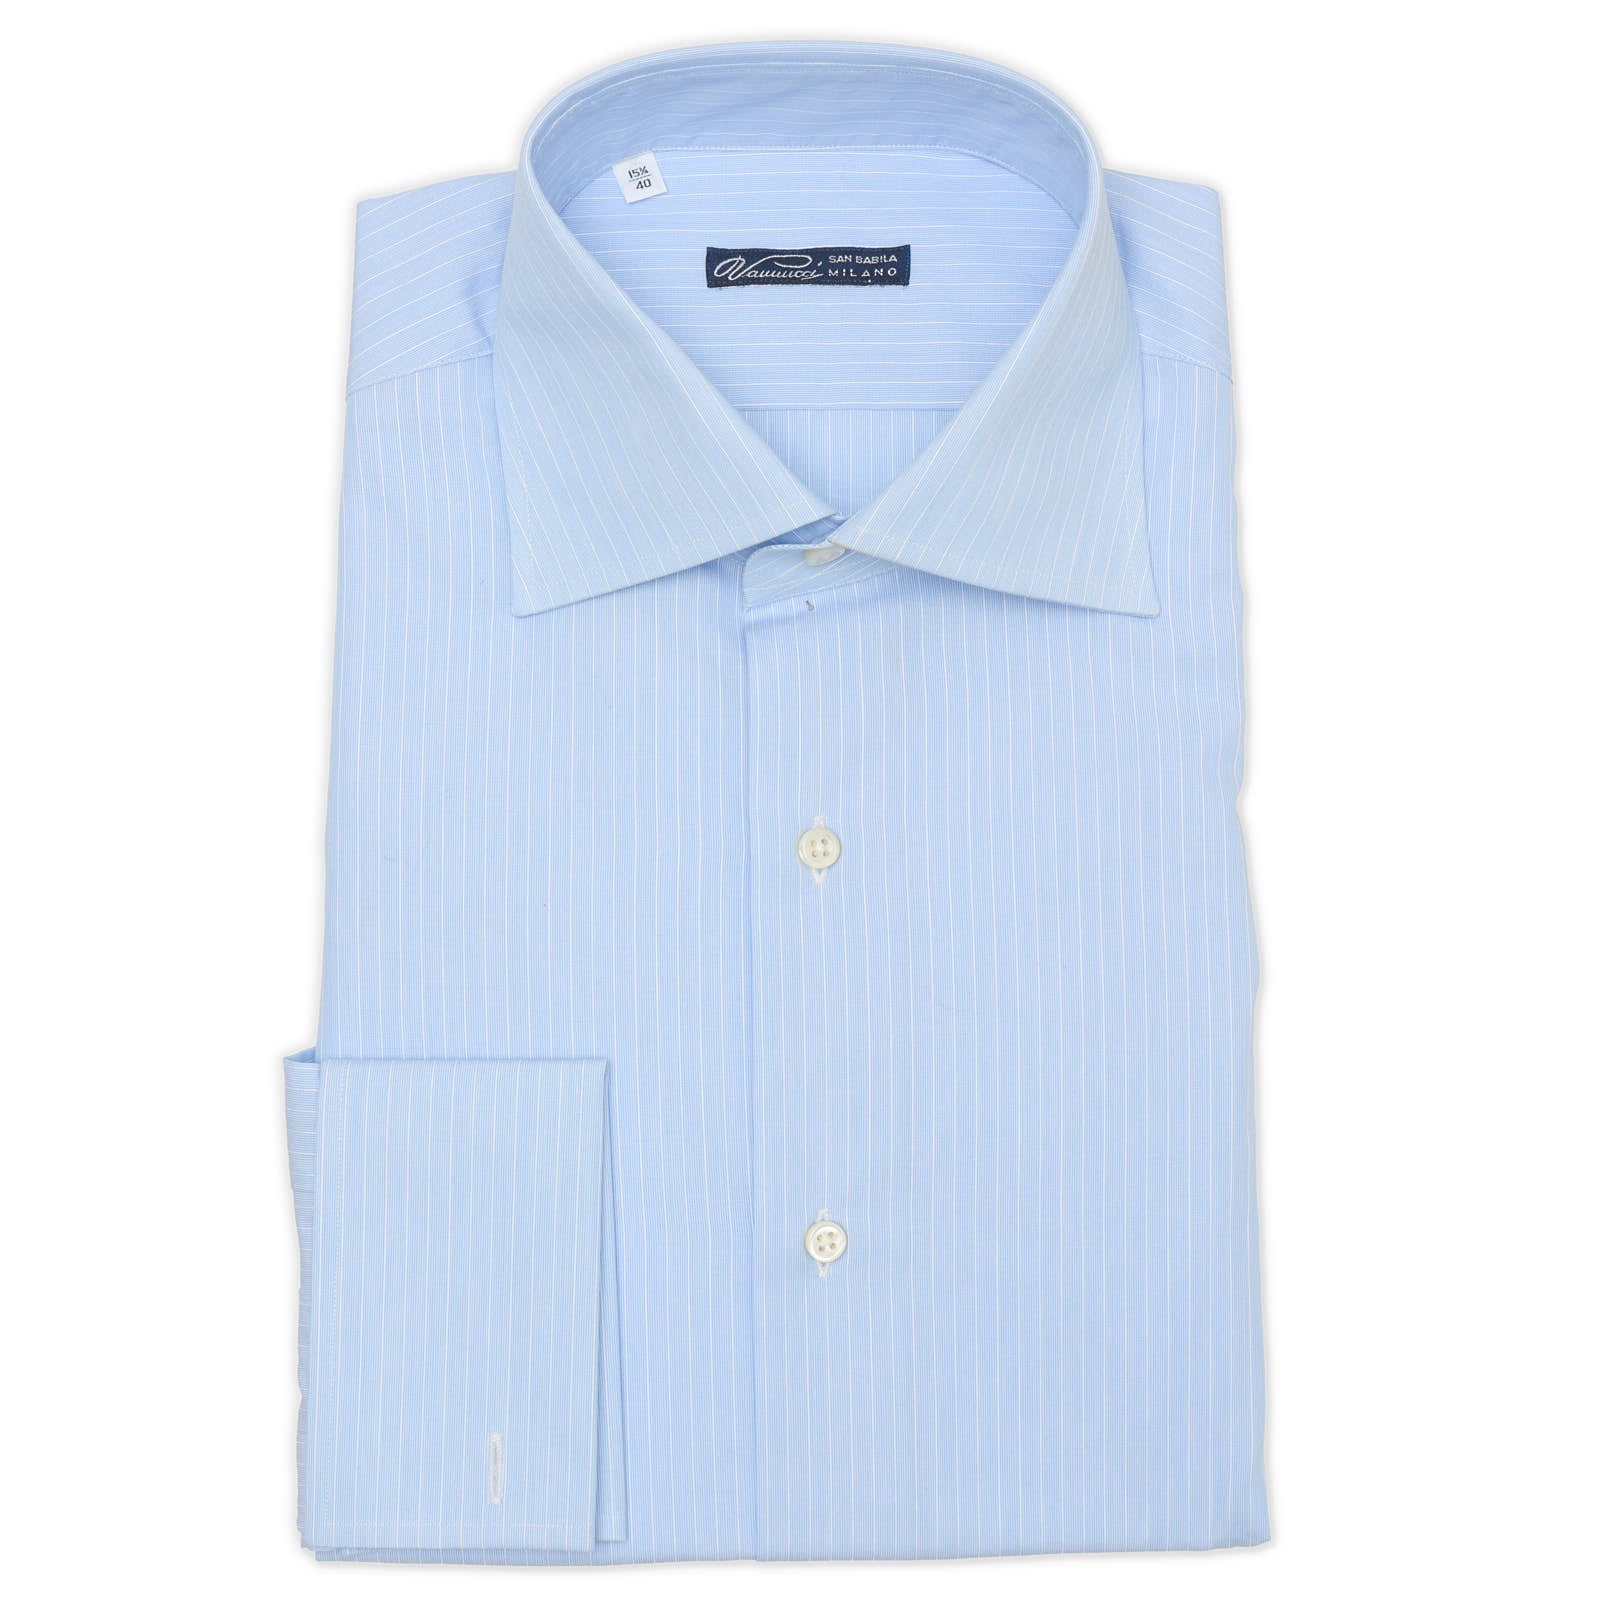 VANNUCCI Milano Blue Striped Cotton French Cuff Dress Shirt EU 40 NEW US 15.75